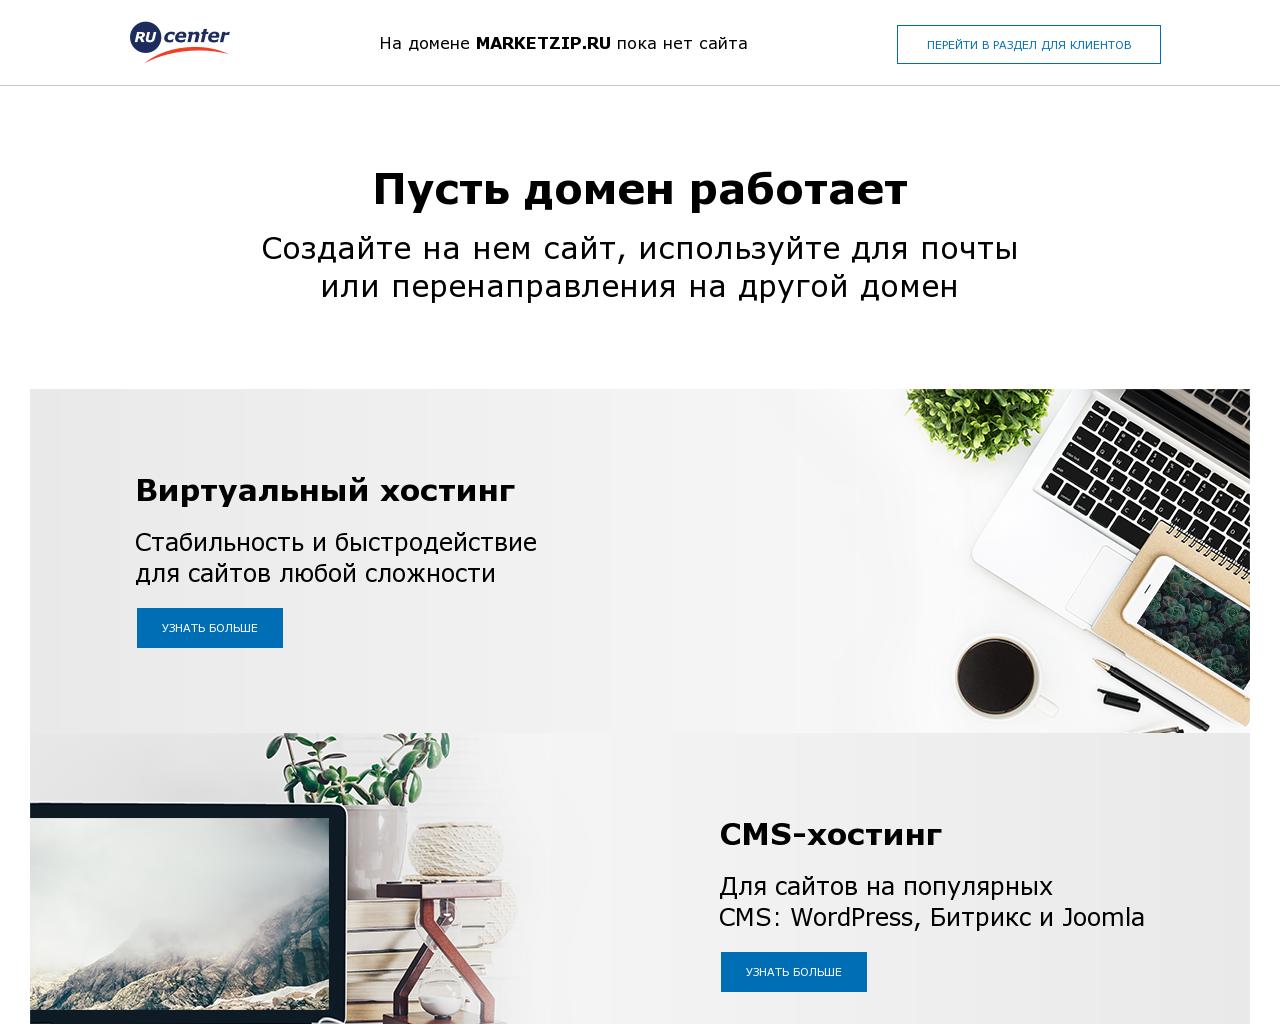 Изображение сайта marketzip.ru в разрешении 1280x1024